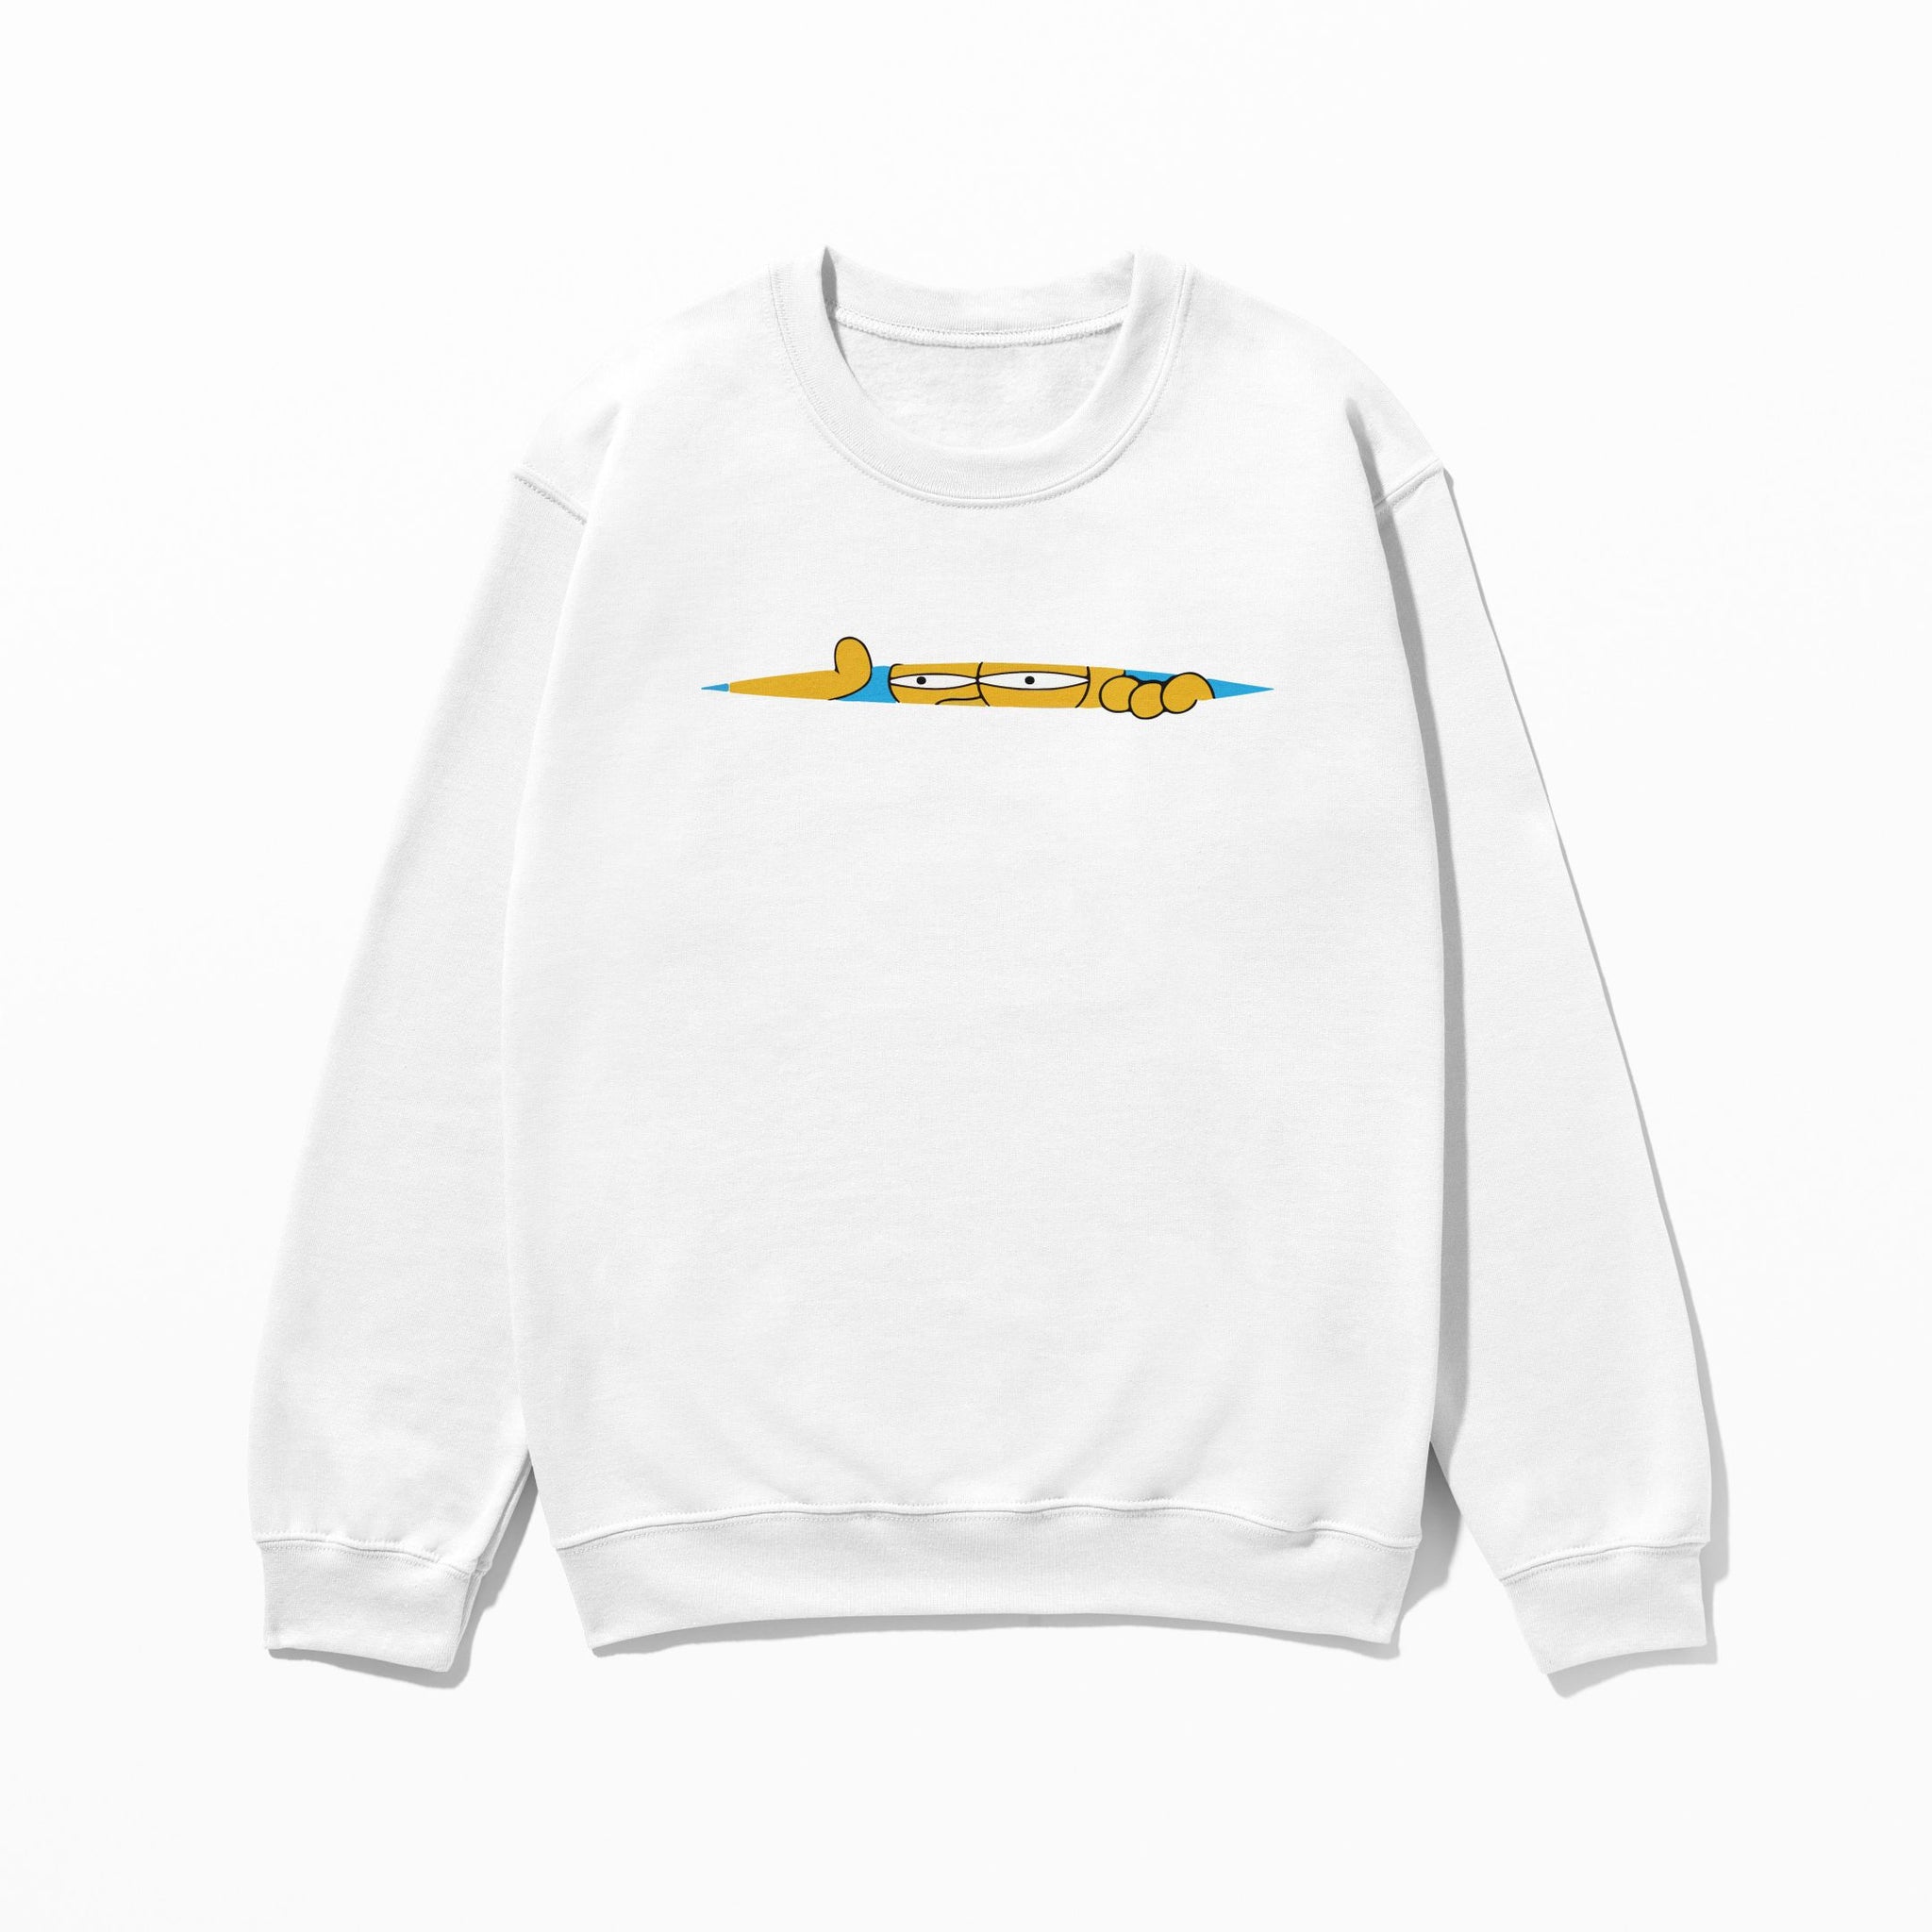 Simpson - Sweatshirt